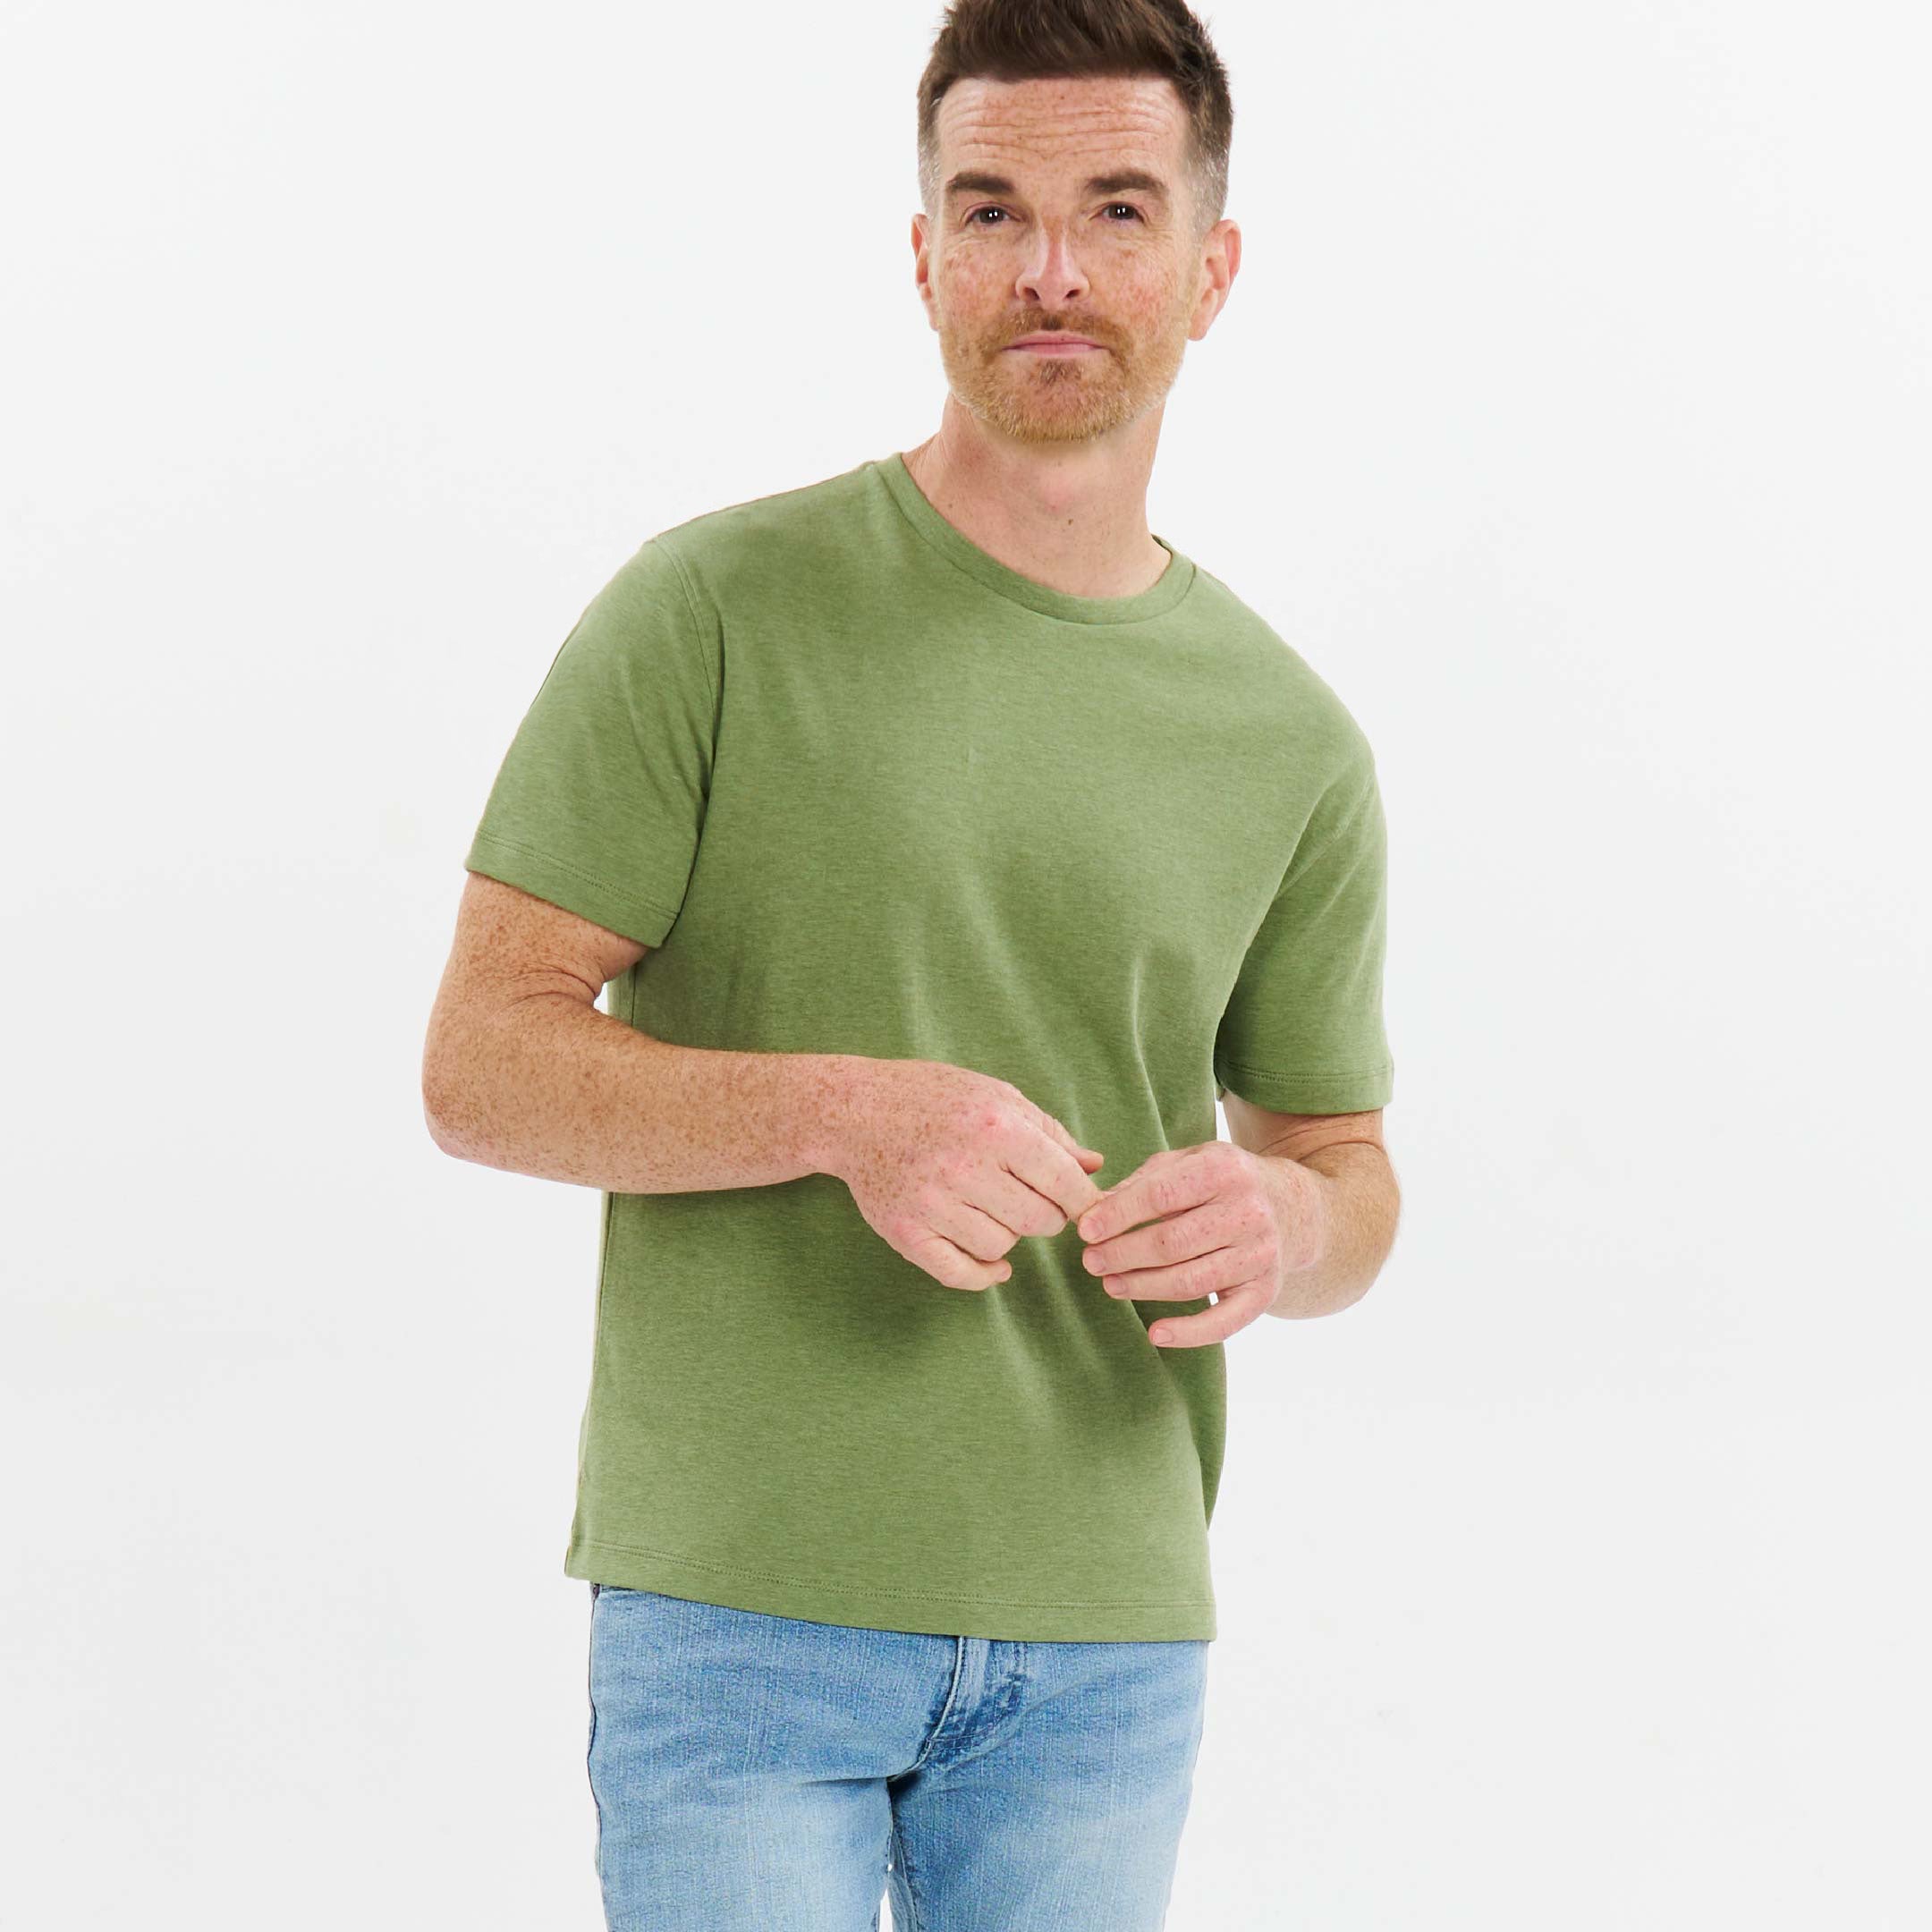 Ash & Erie Heather Green Luxury Soft Touch Crew Neck T-Shirt for Short Men   Short Sleeve Premium Tee